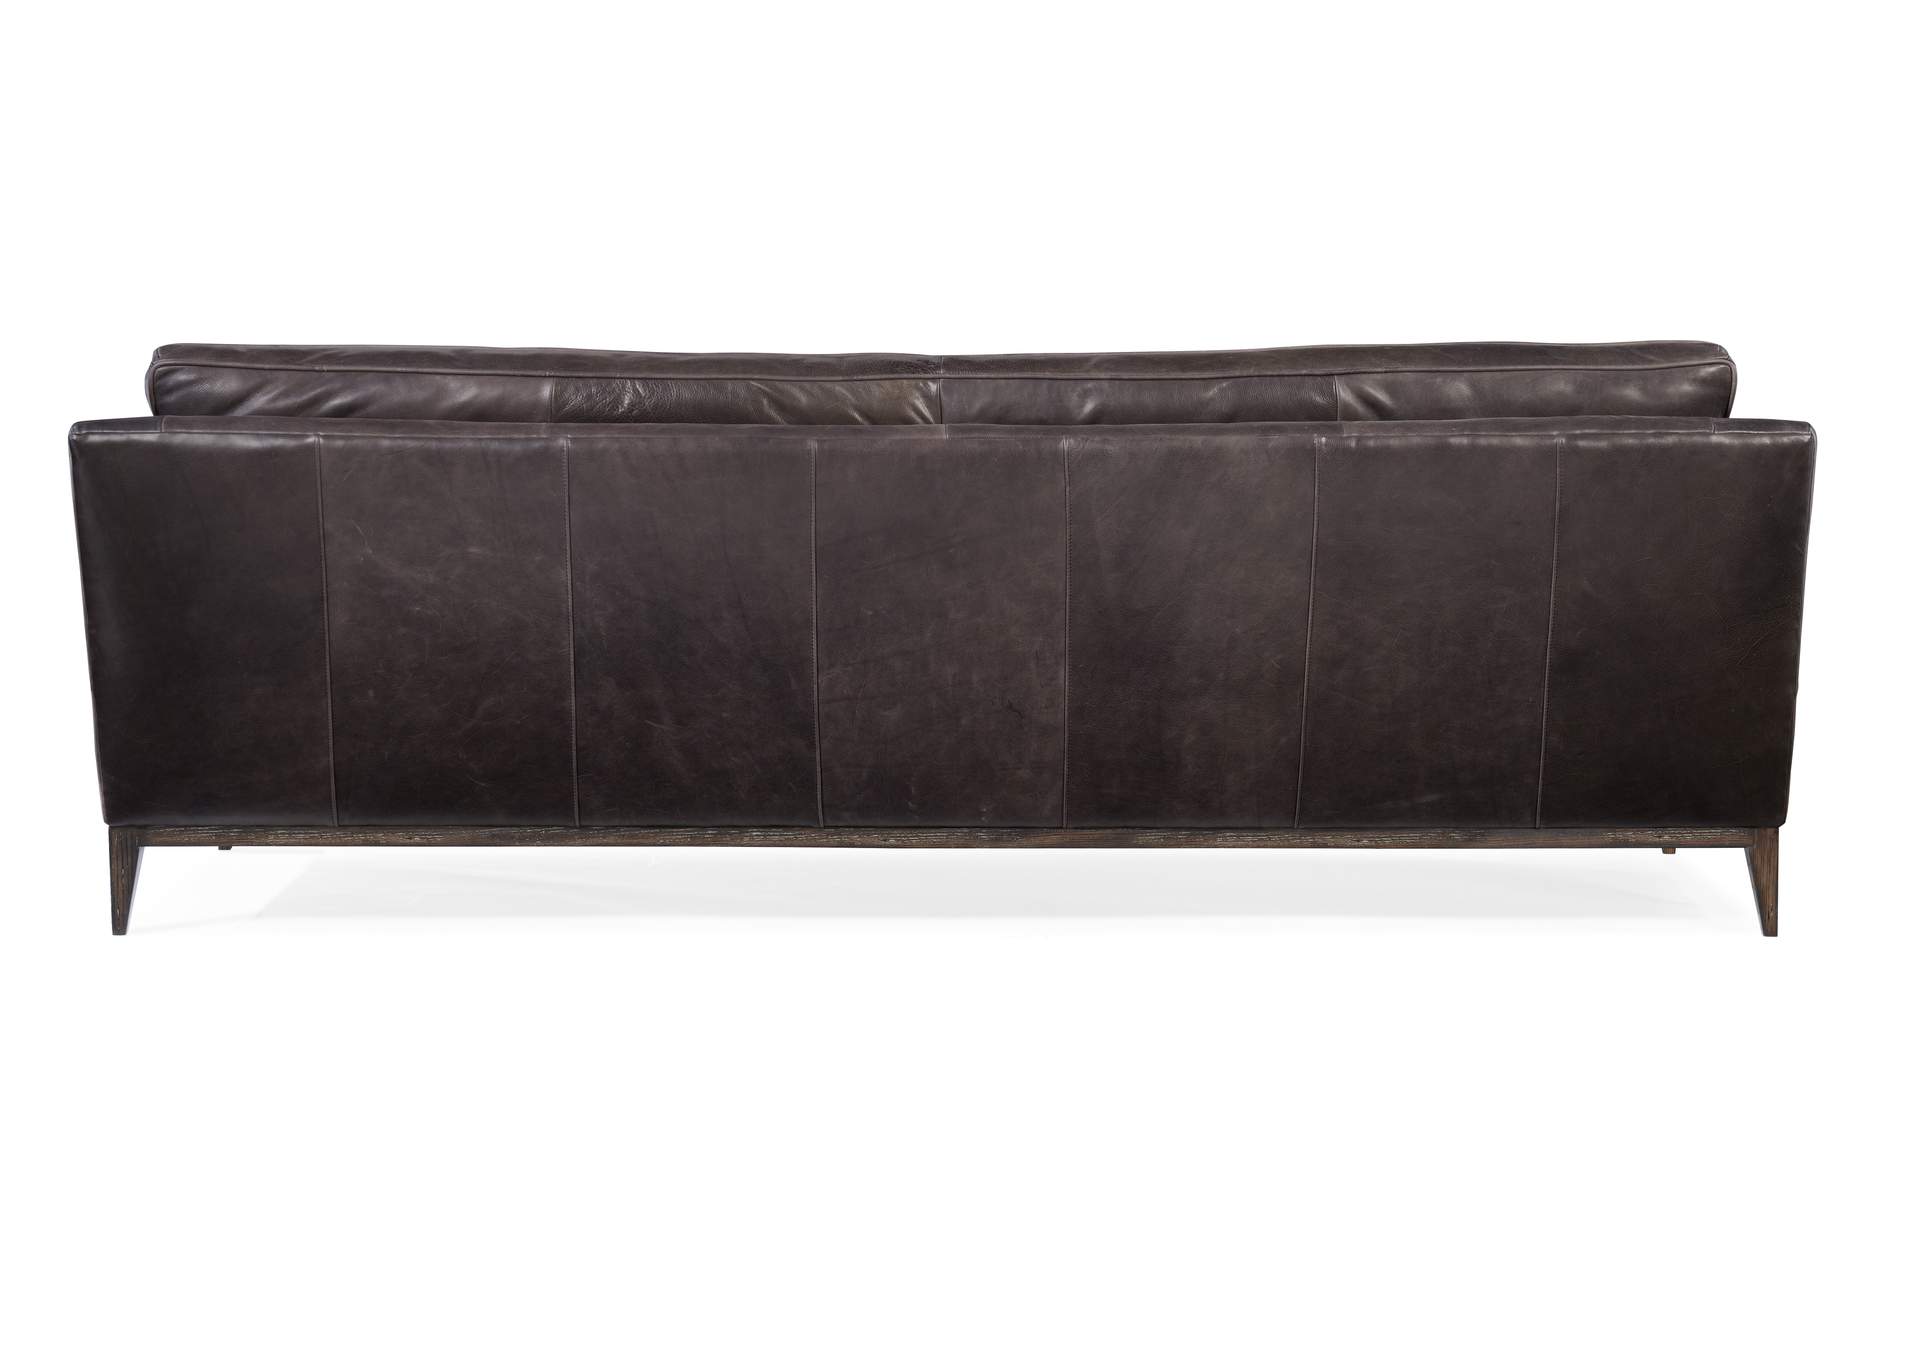 Kandor Leather Stationary Sofa,Hooker Furniture